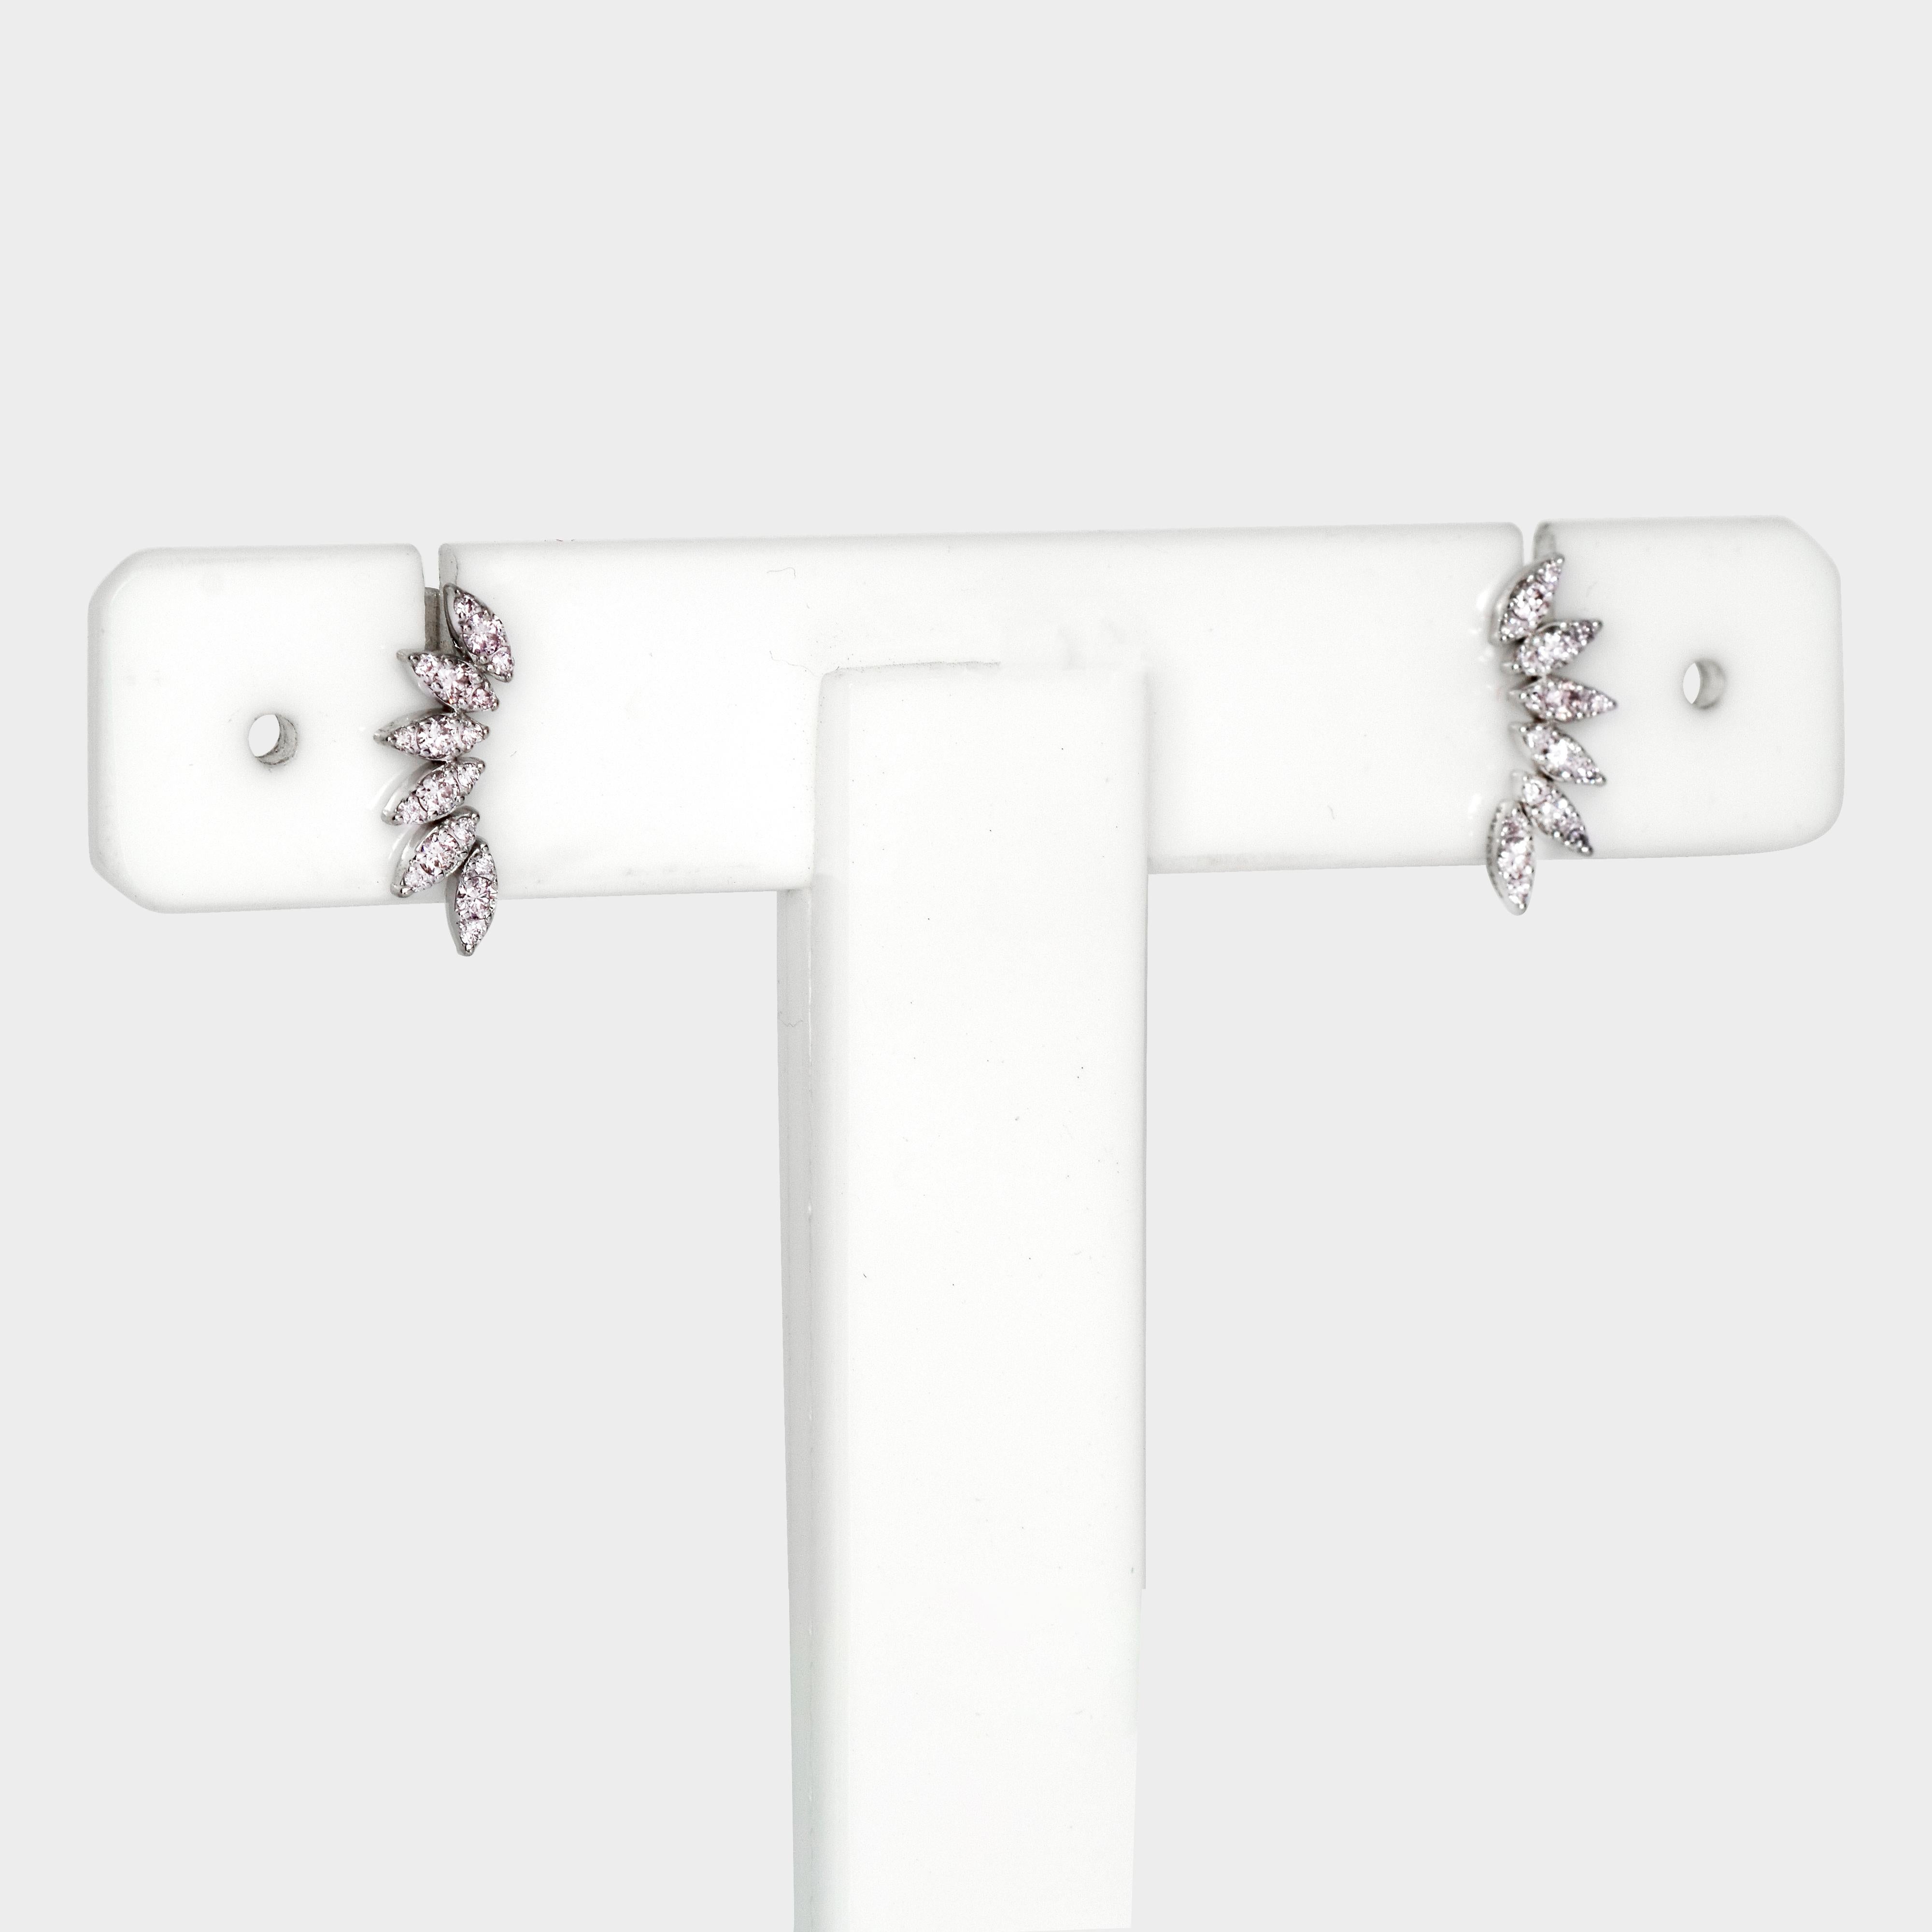 IGI 14K 0.33 ct Natural Pink Diamonds Art Deco Design Stud Earrings For Sale 1